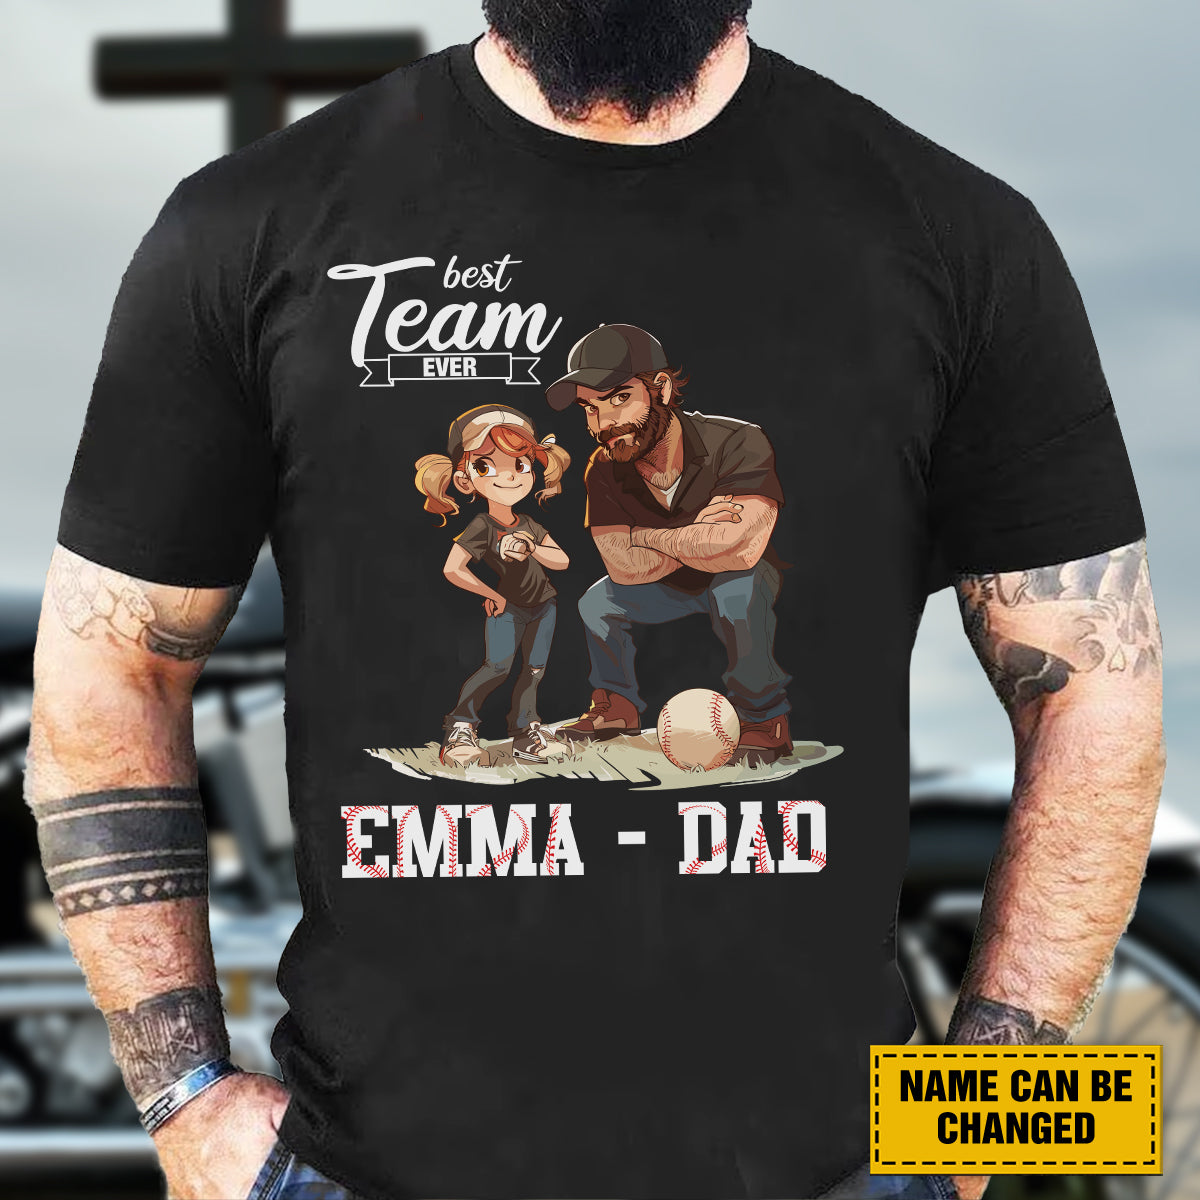 Teesdily | Customized Best Team Ever Shirt, Baseball Dad Shirt, Father Daughter Gift, Dad Tee, Unisex Tshirt Hoodie Sweatshirt Size S-XL / Mug 11-15oz